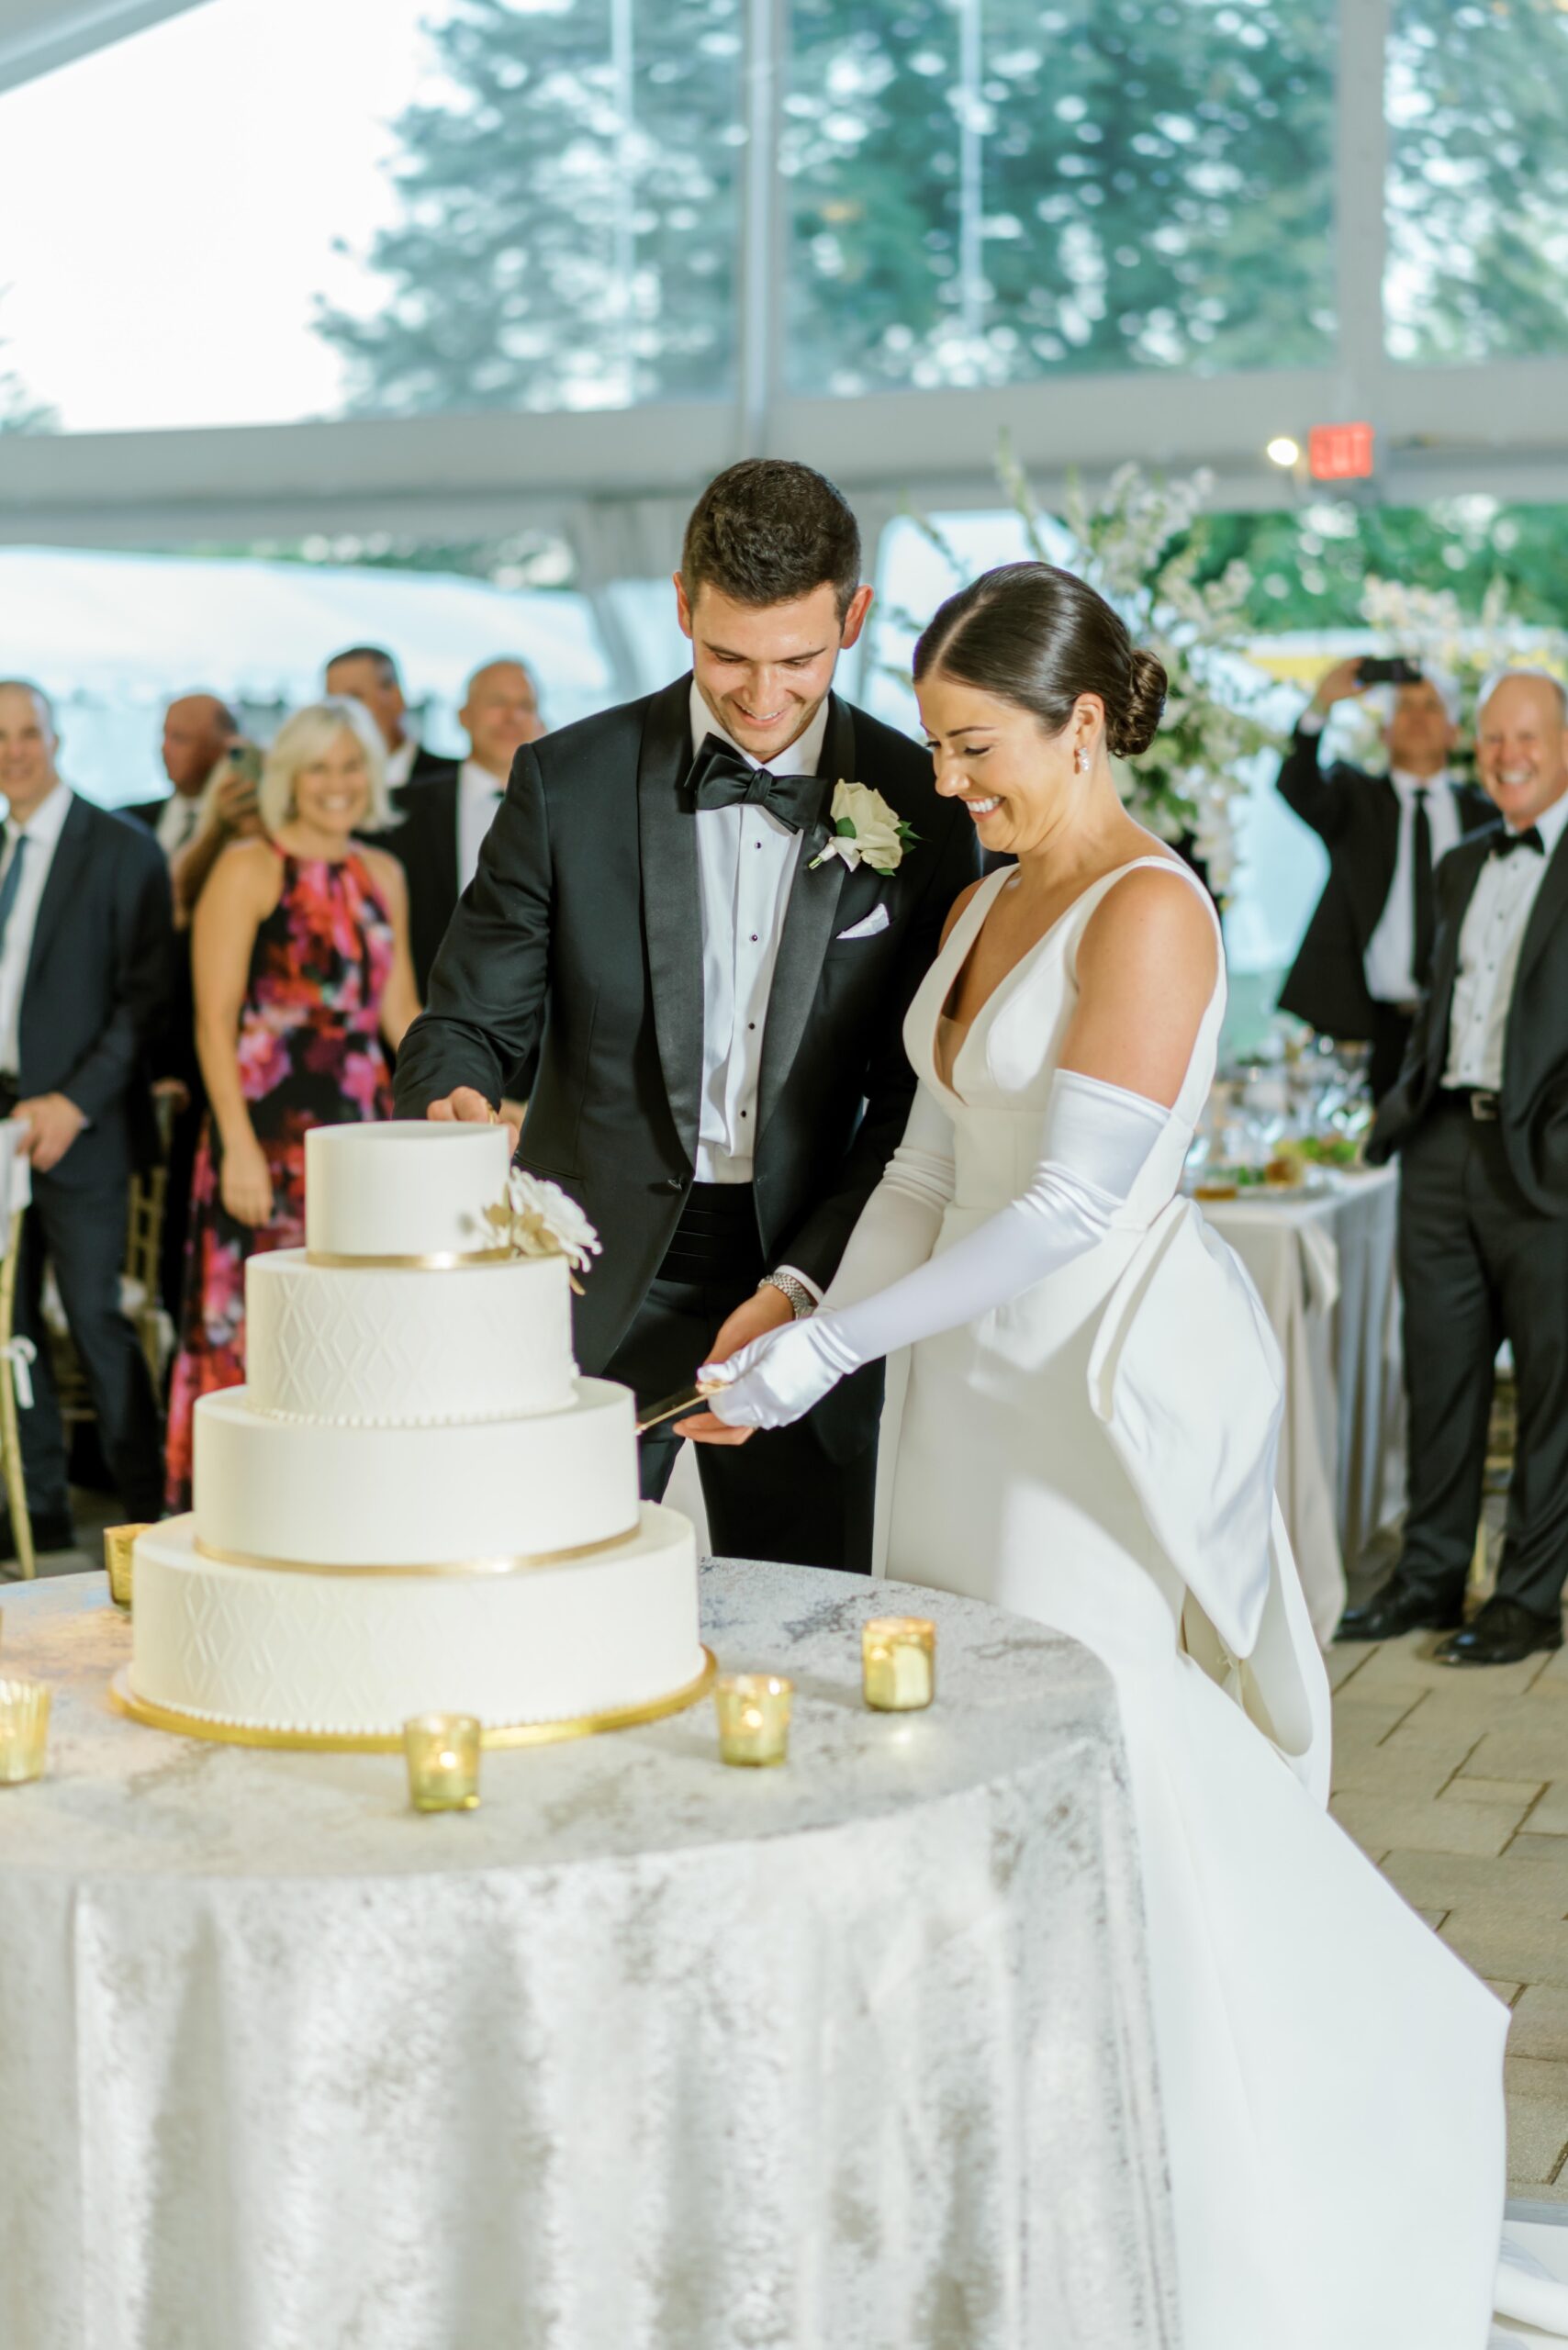 Bride and groom cut their wedding cake